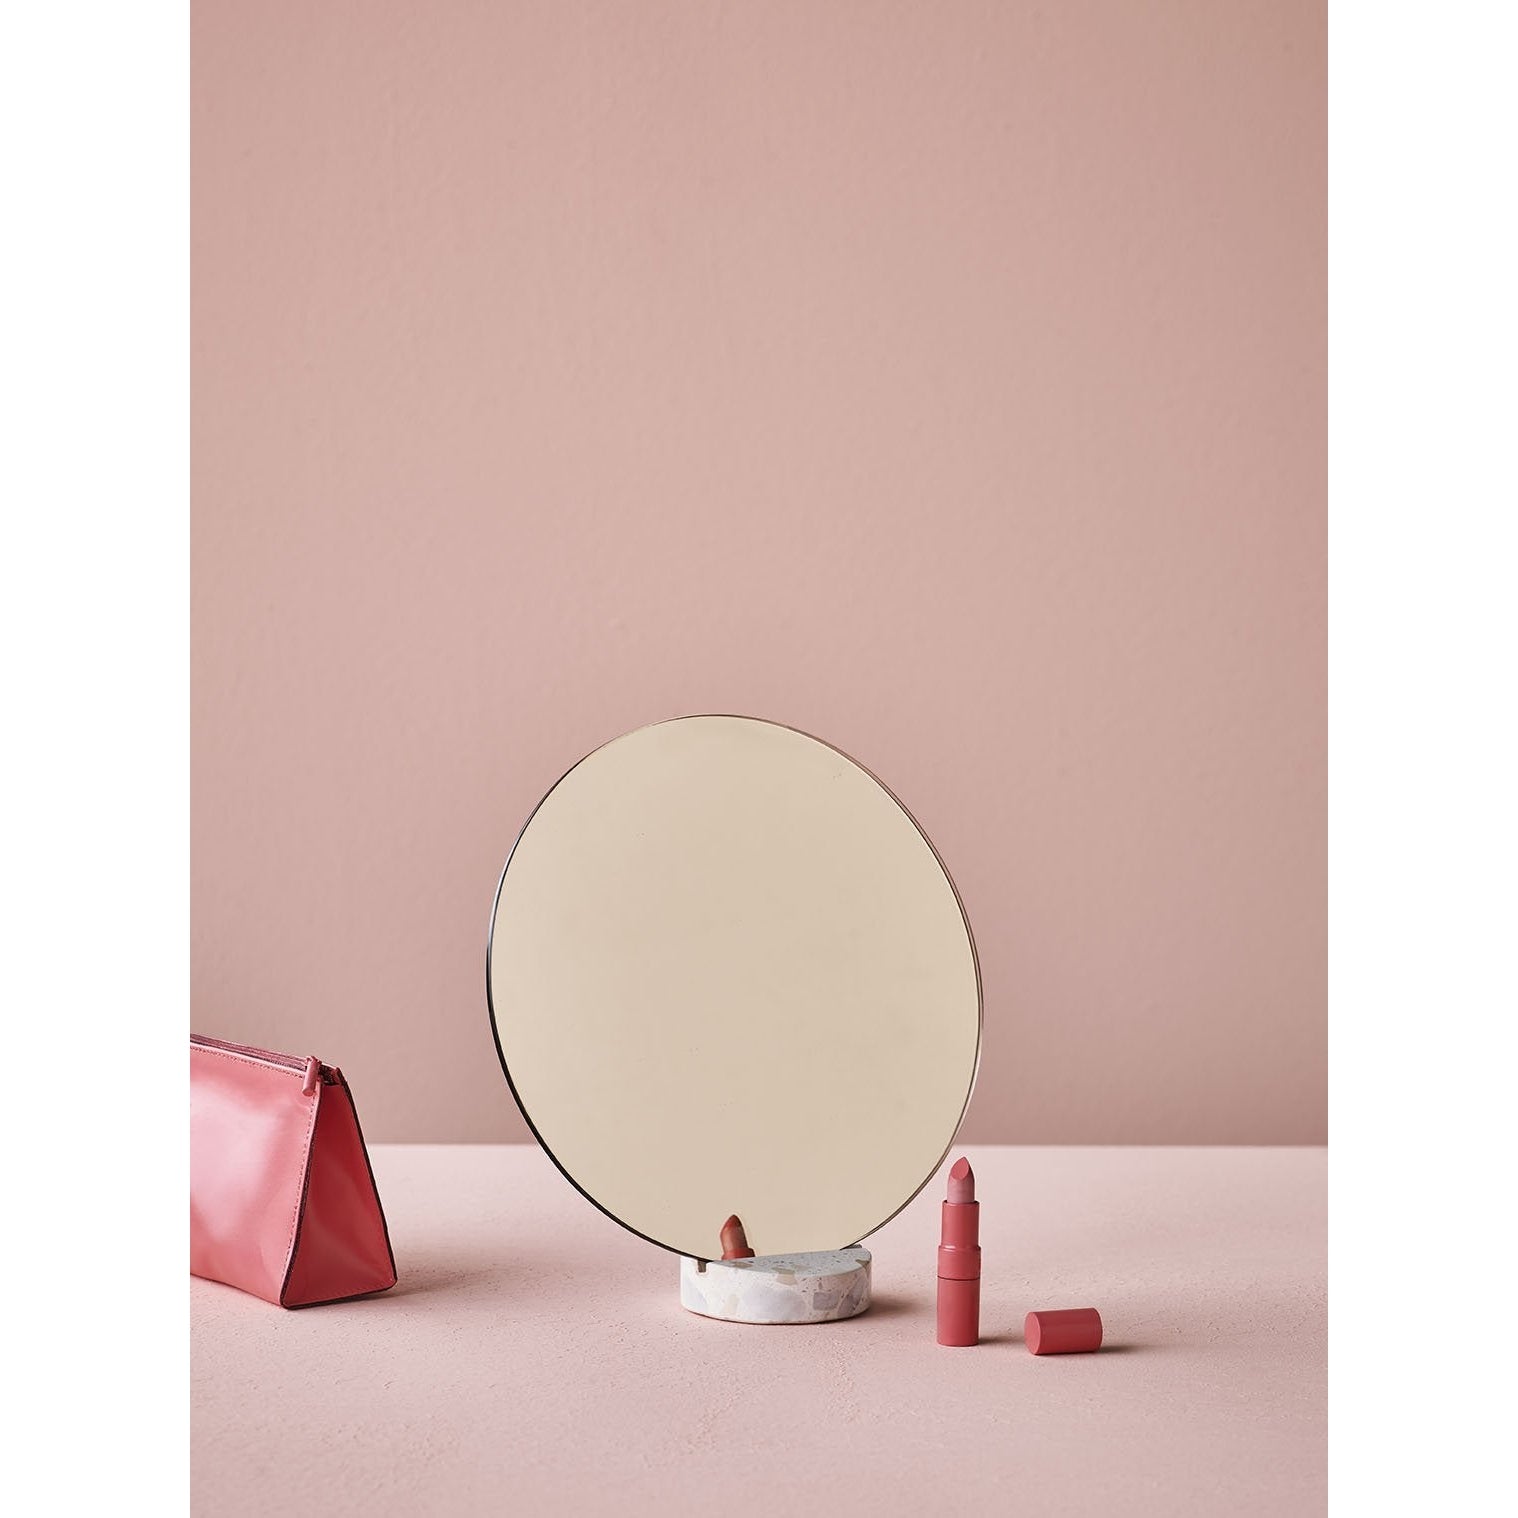 Lucie Kaas Erat miroir rose, Ø 25cm